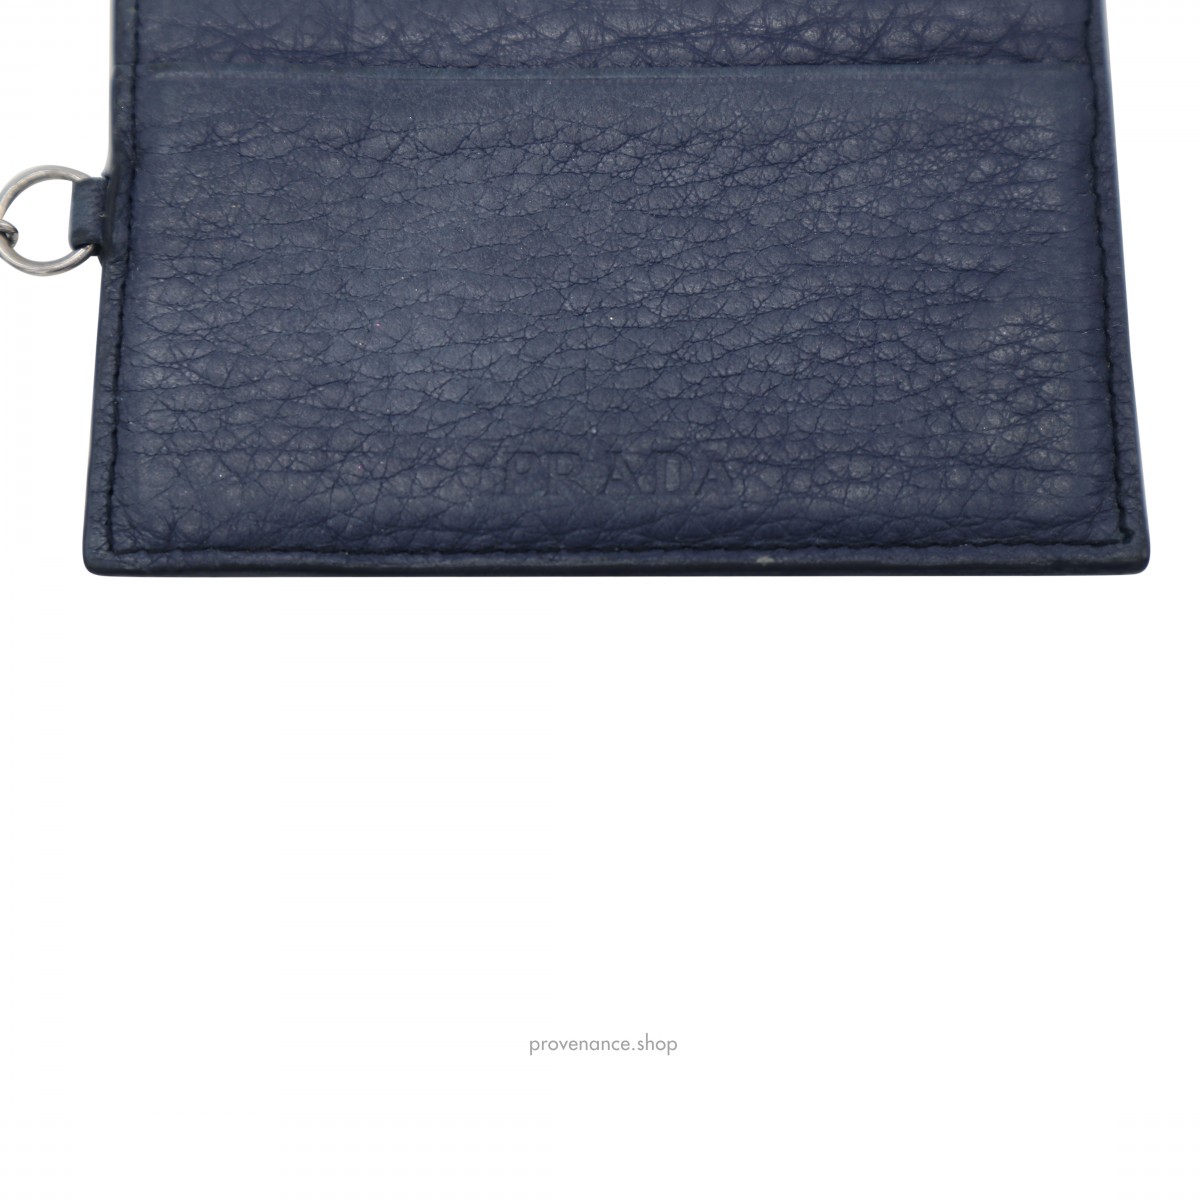 Prada Cardholder Wallet - Navy Blue Saffiano Leather - 3